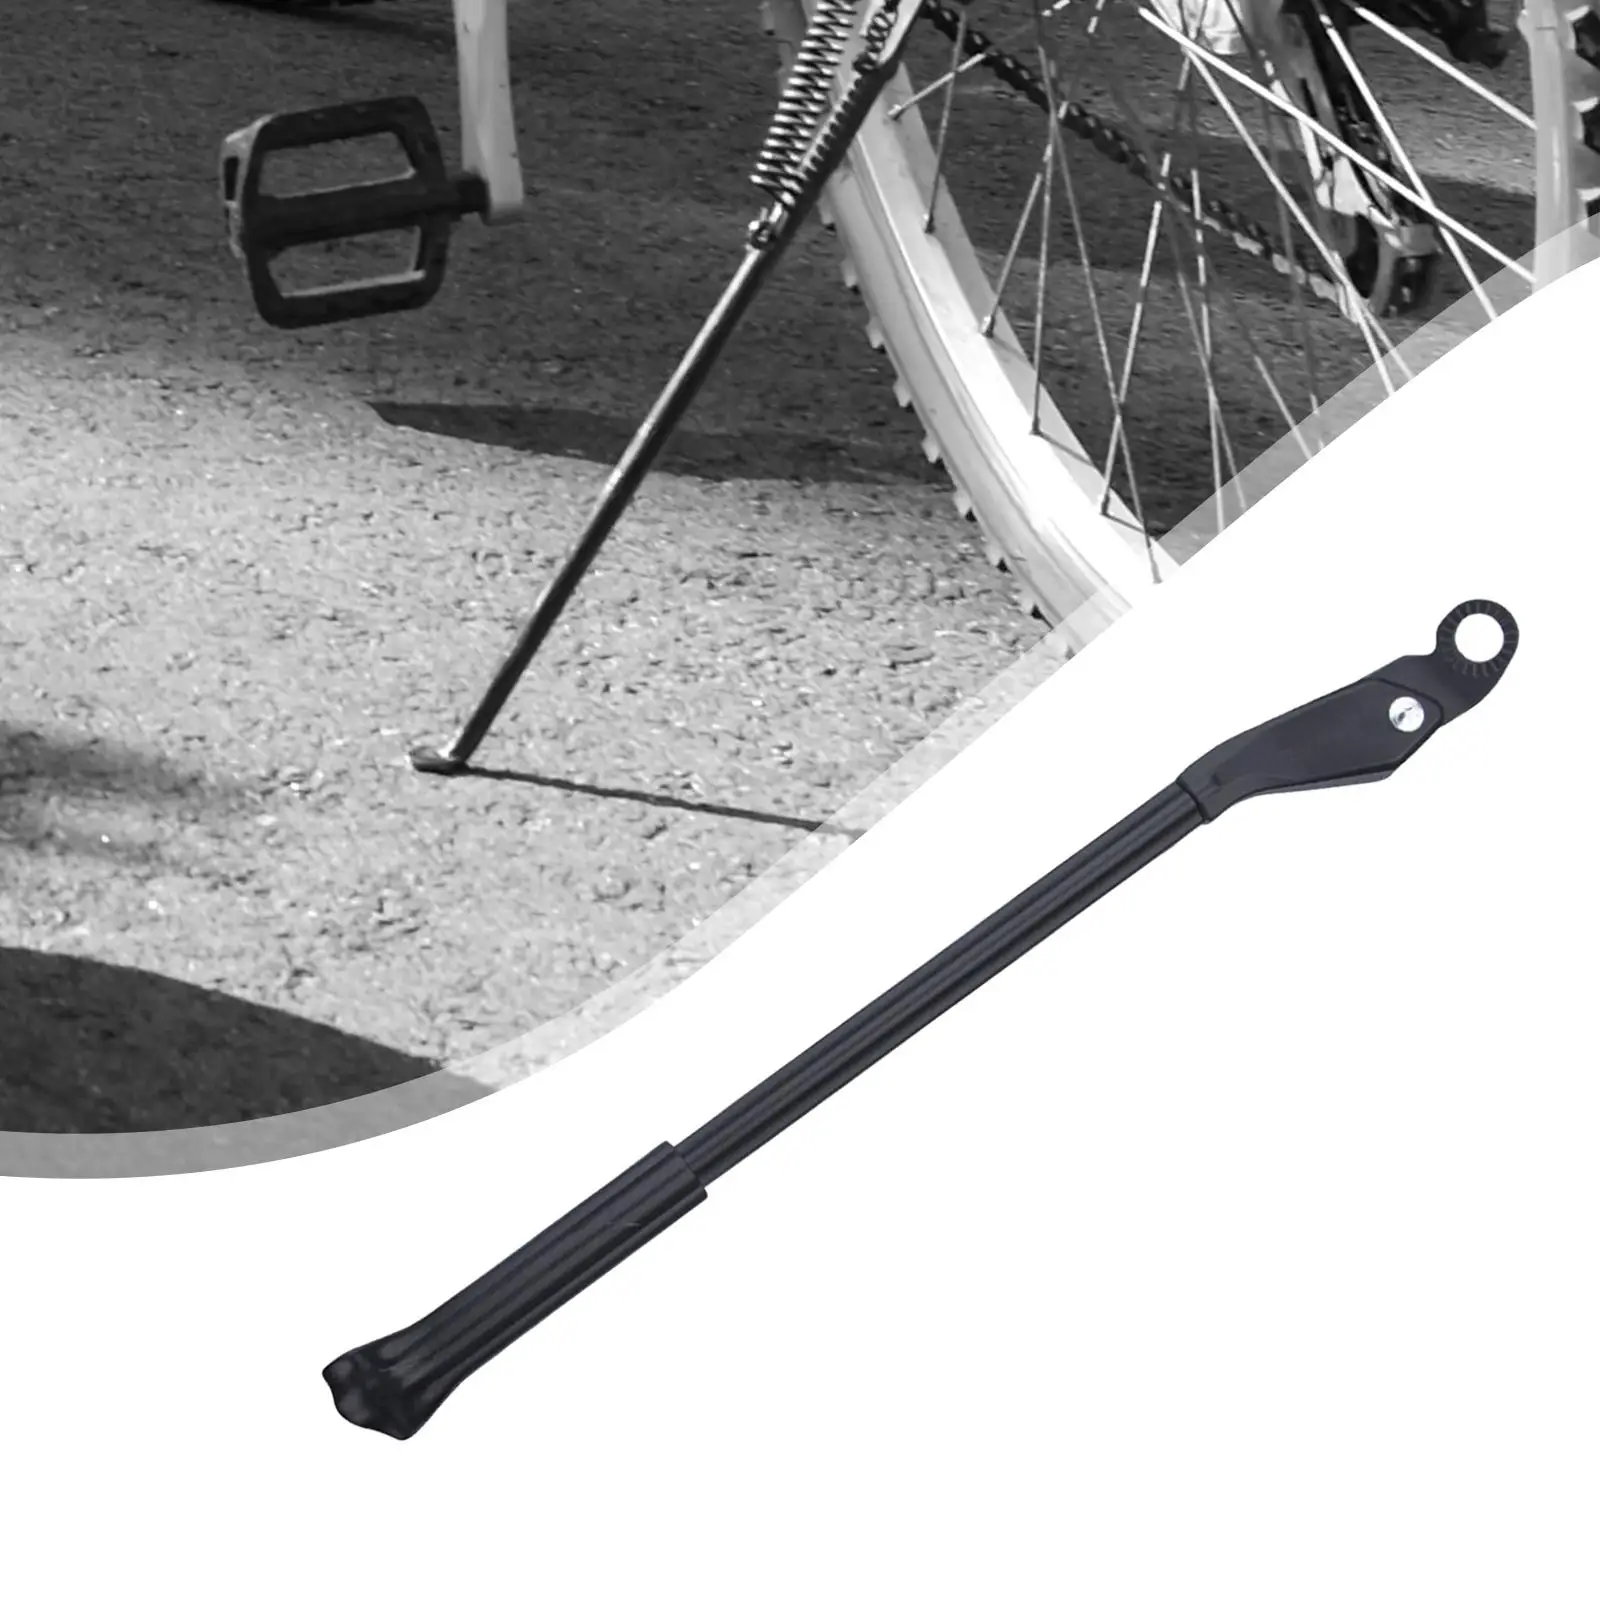 Bike Kickstand Foot Parking Stand Adjustable Bike Holder Aluminum Alloy Bike Side Kickstand Outdoor Riding Biking Accessories